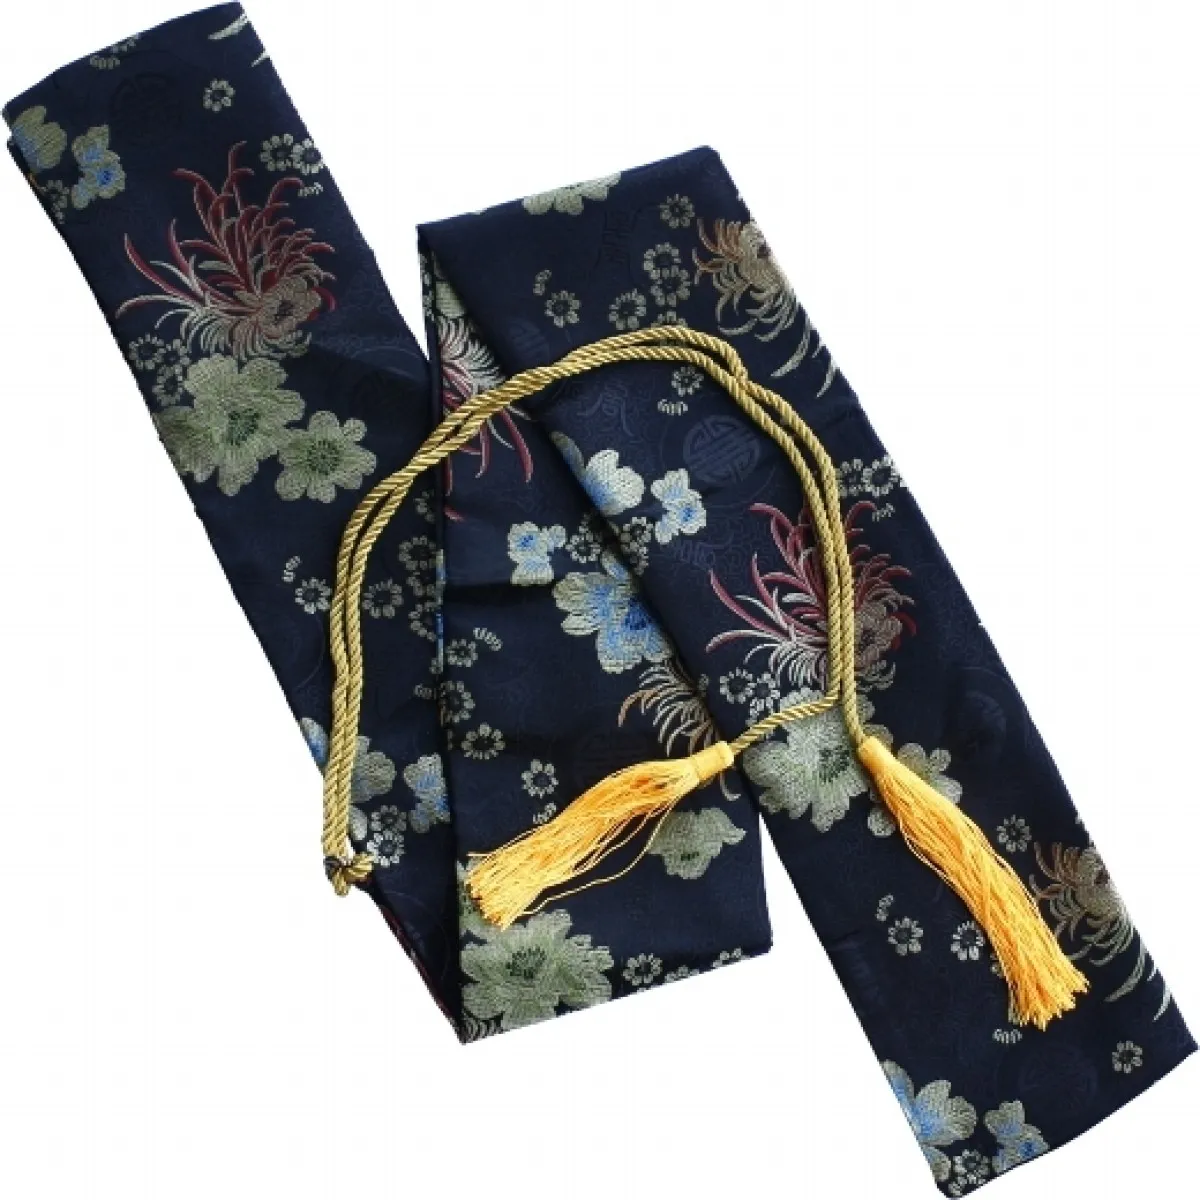 Brocade sheath for katana